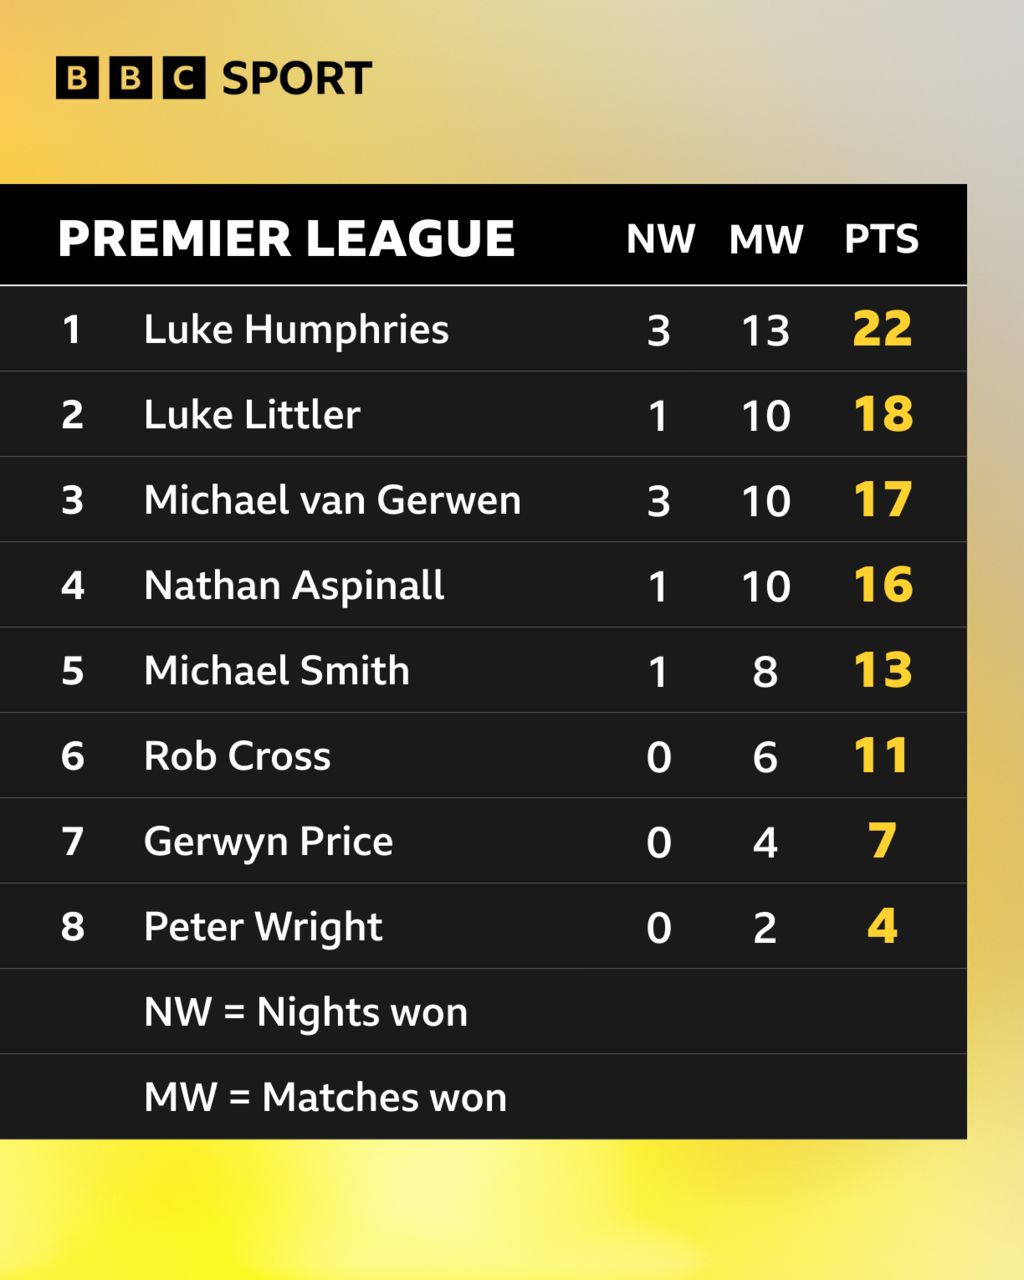 Premier League Darts table: Luke Humphries 22, Luke Littler 18, Michael Van Gerwen 17, Nathan Aspinall 16, Michael Smith 13, Rob Cross 11, Gerwyn Price 7, Peter Wright 4